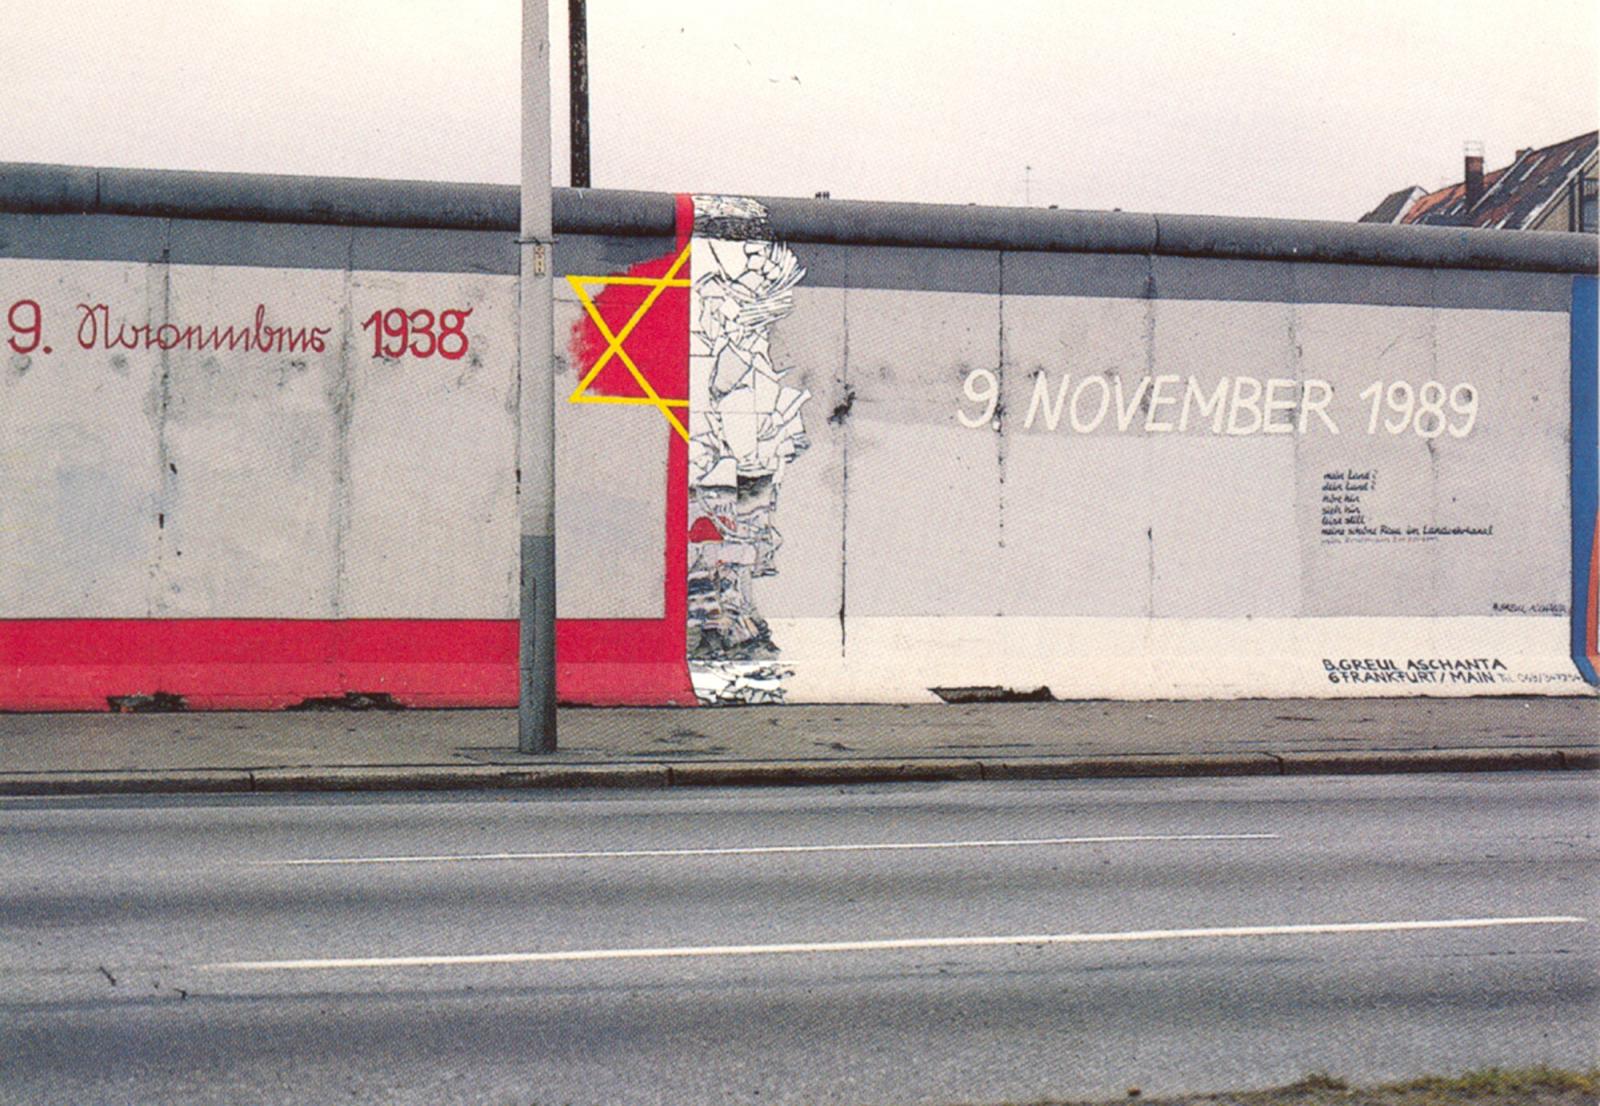 Barbara Greul Aschanta, „Deutschland im November“ (Germany in November), 1990, postcard